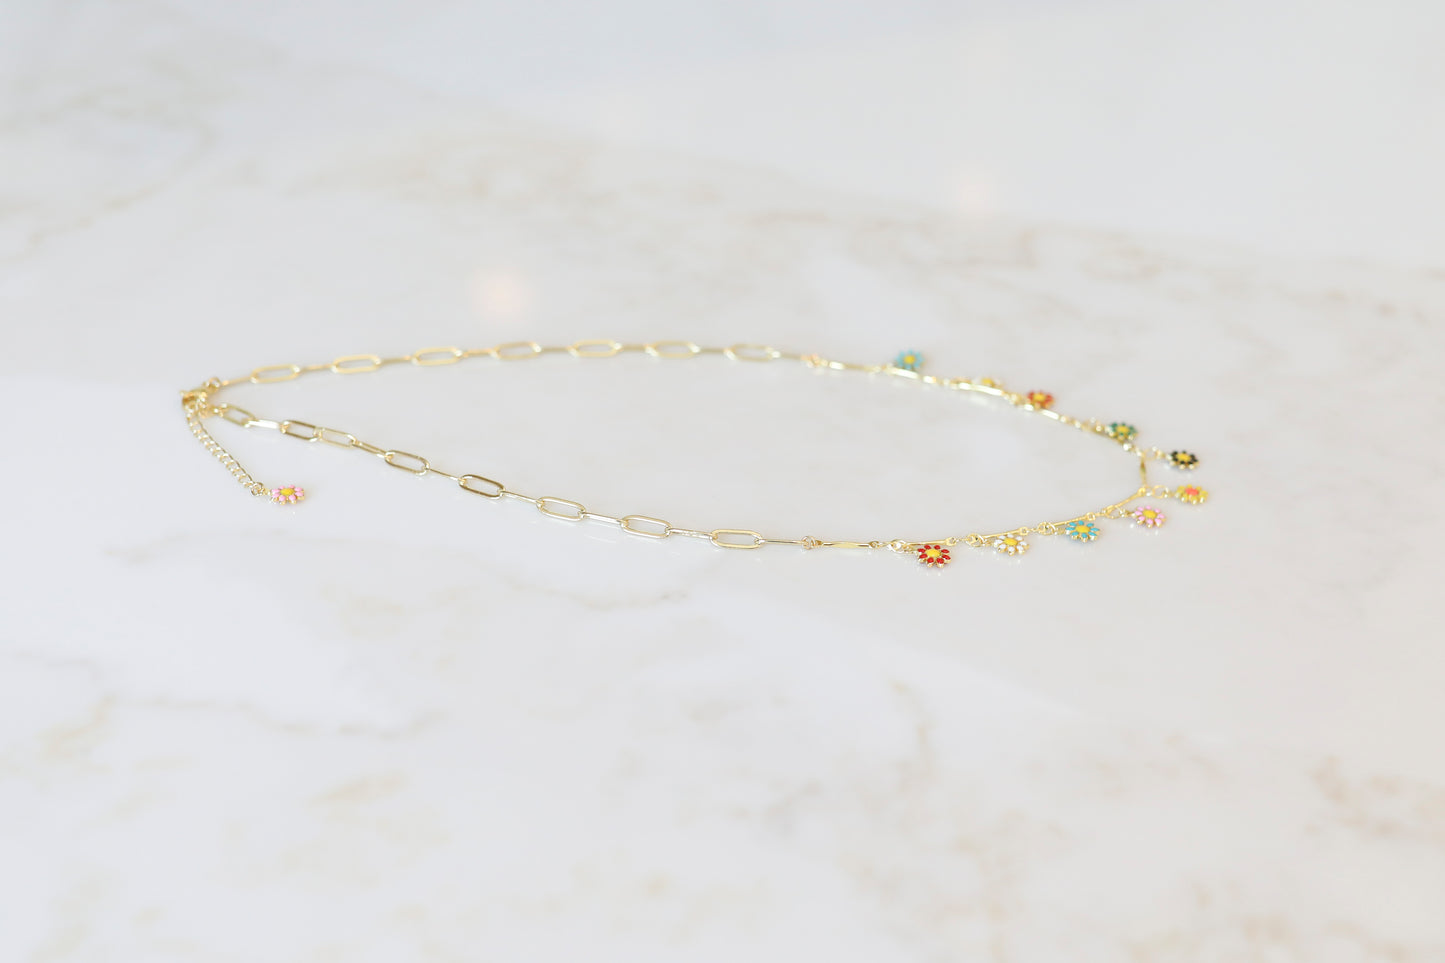 Multicolored Enamel Daisy Charm Layering Necklace 